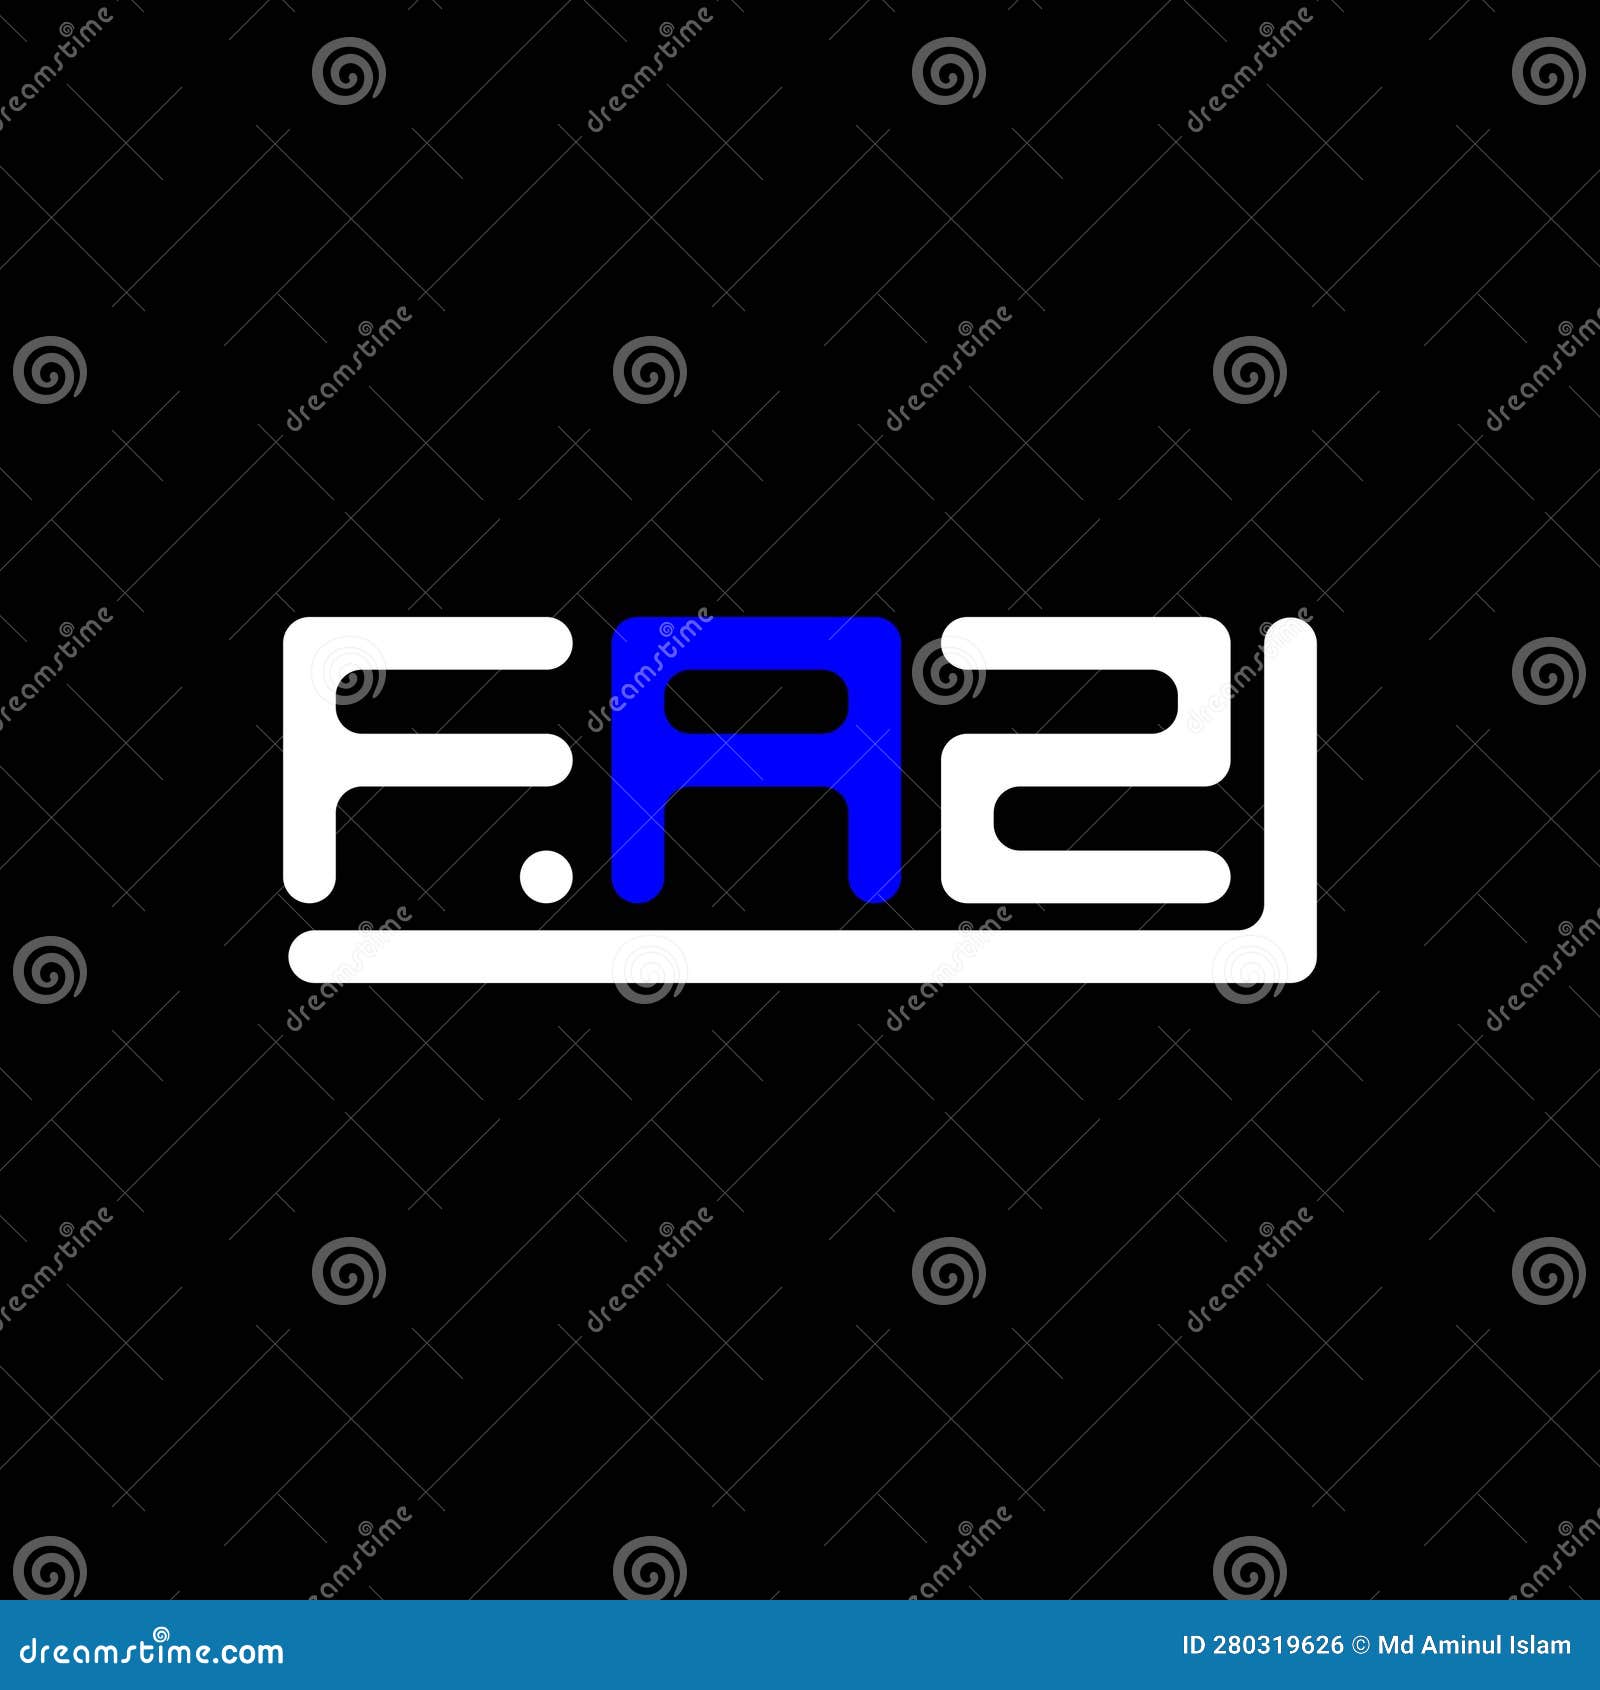 faz letter logo creative  with  graphic, faz